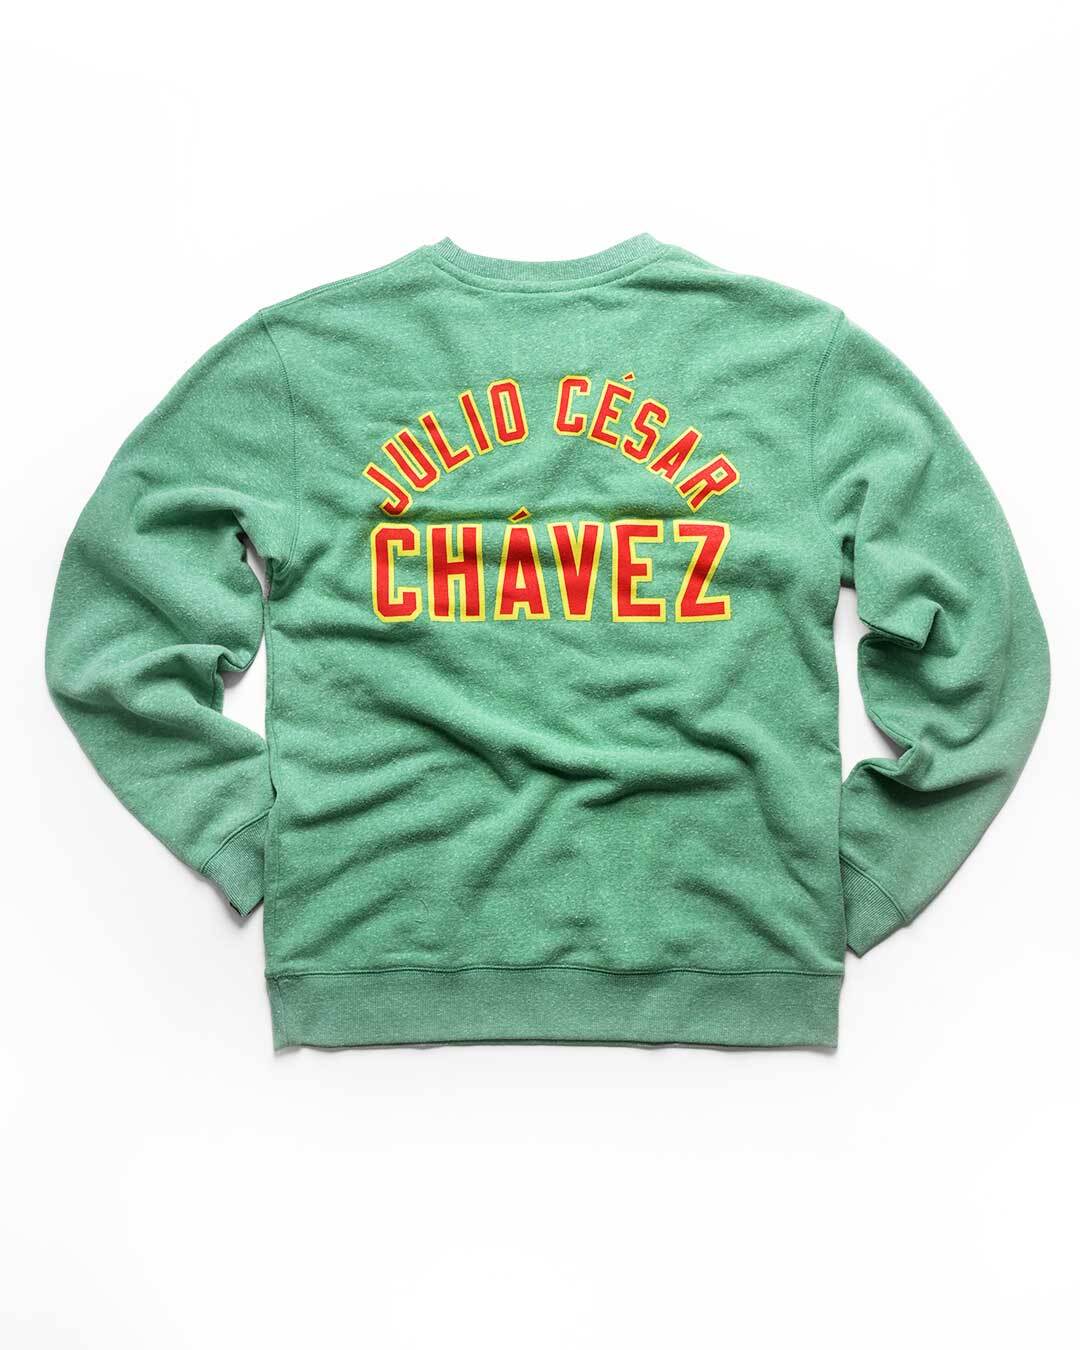 Kronk Gym x Chavez Green Sweatshirt - Roots of Fight Canada